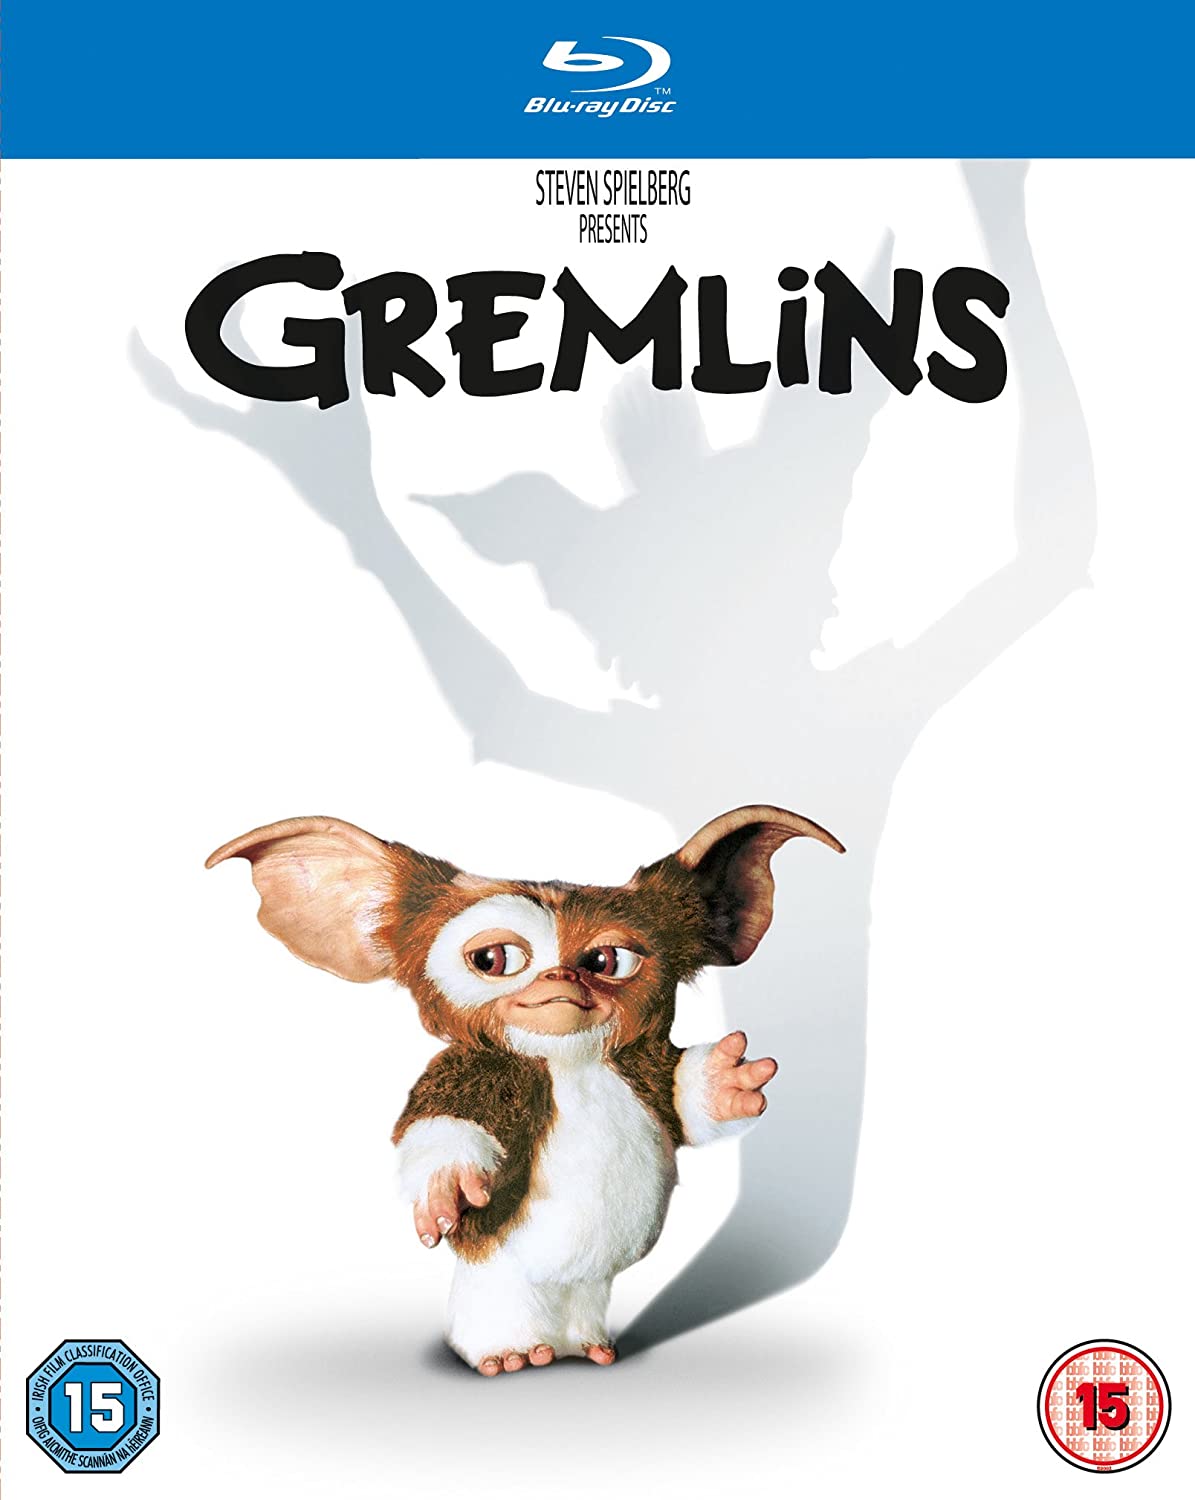 Stiahni si Filmy CZ/SK dabing Gremlins (1984)(Remastered)(BluRay)(720p)(2xCZ/EN) = CSFD 73%